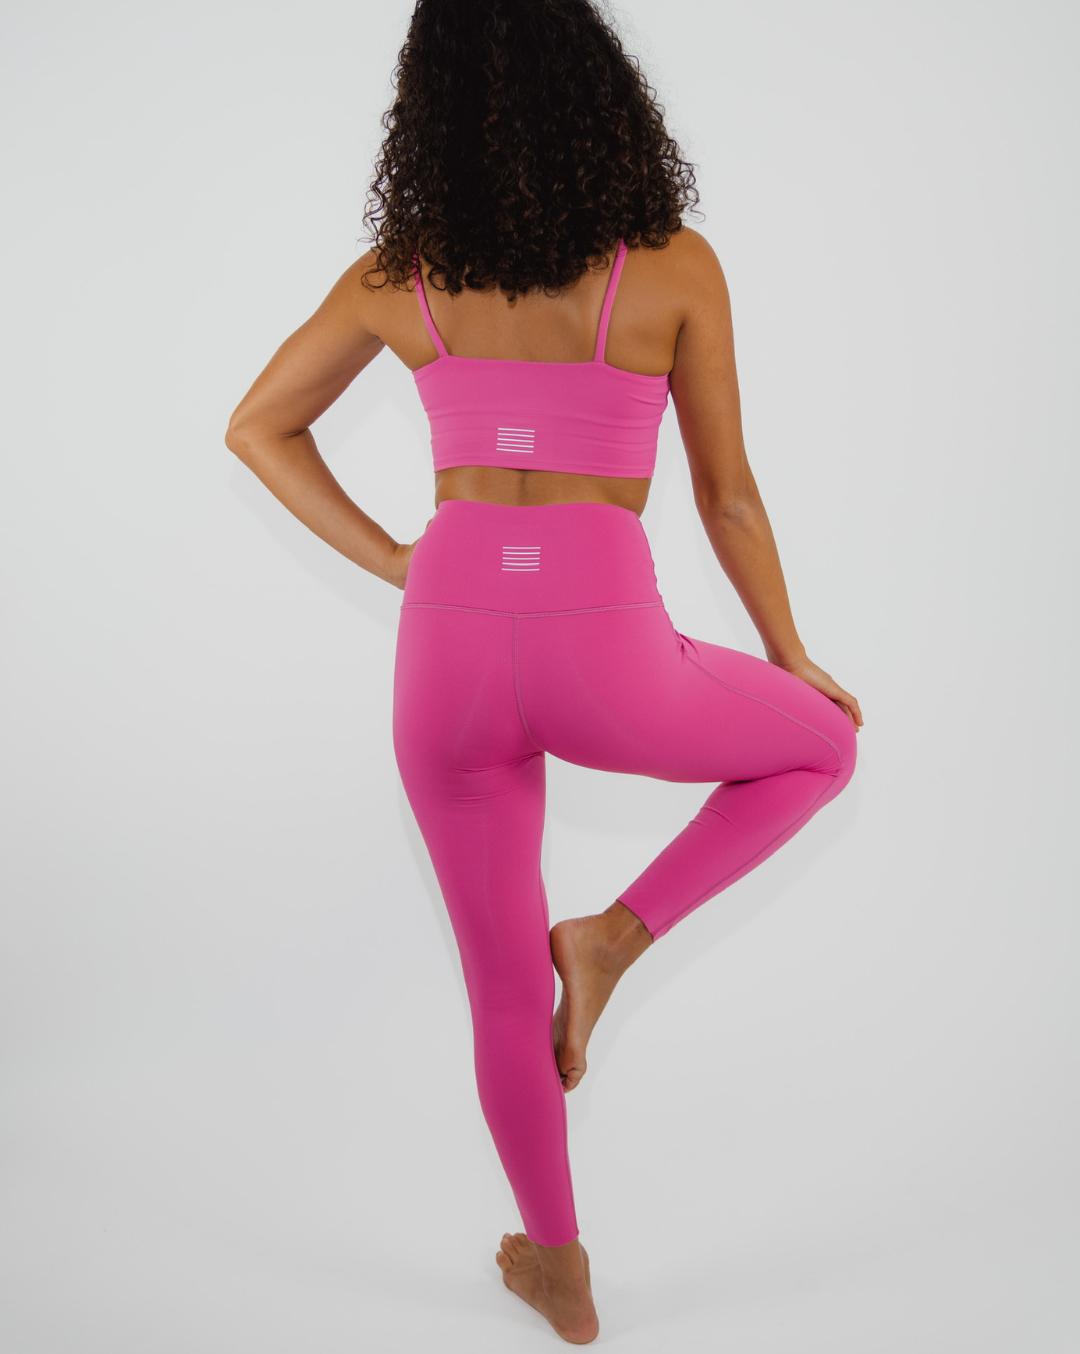 
                  
                    Premium quality athletic wear in vibrant pink tones
                  
                